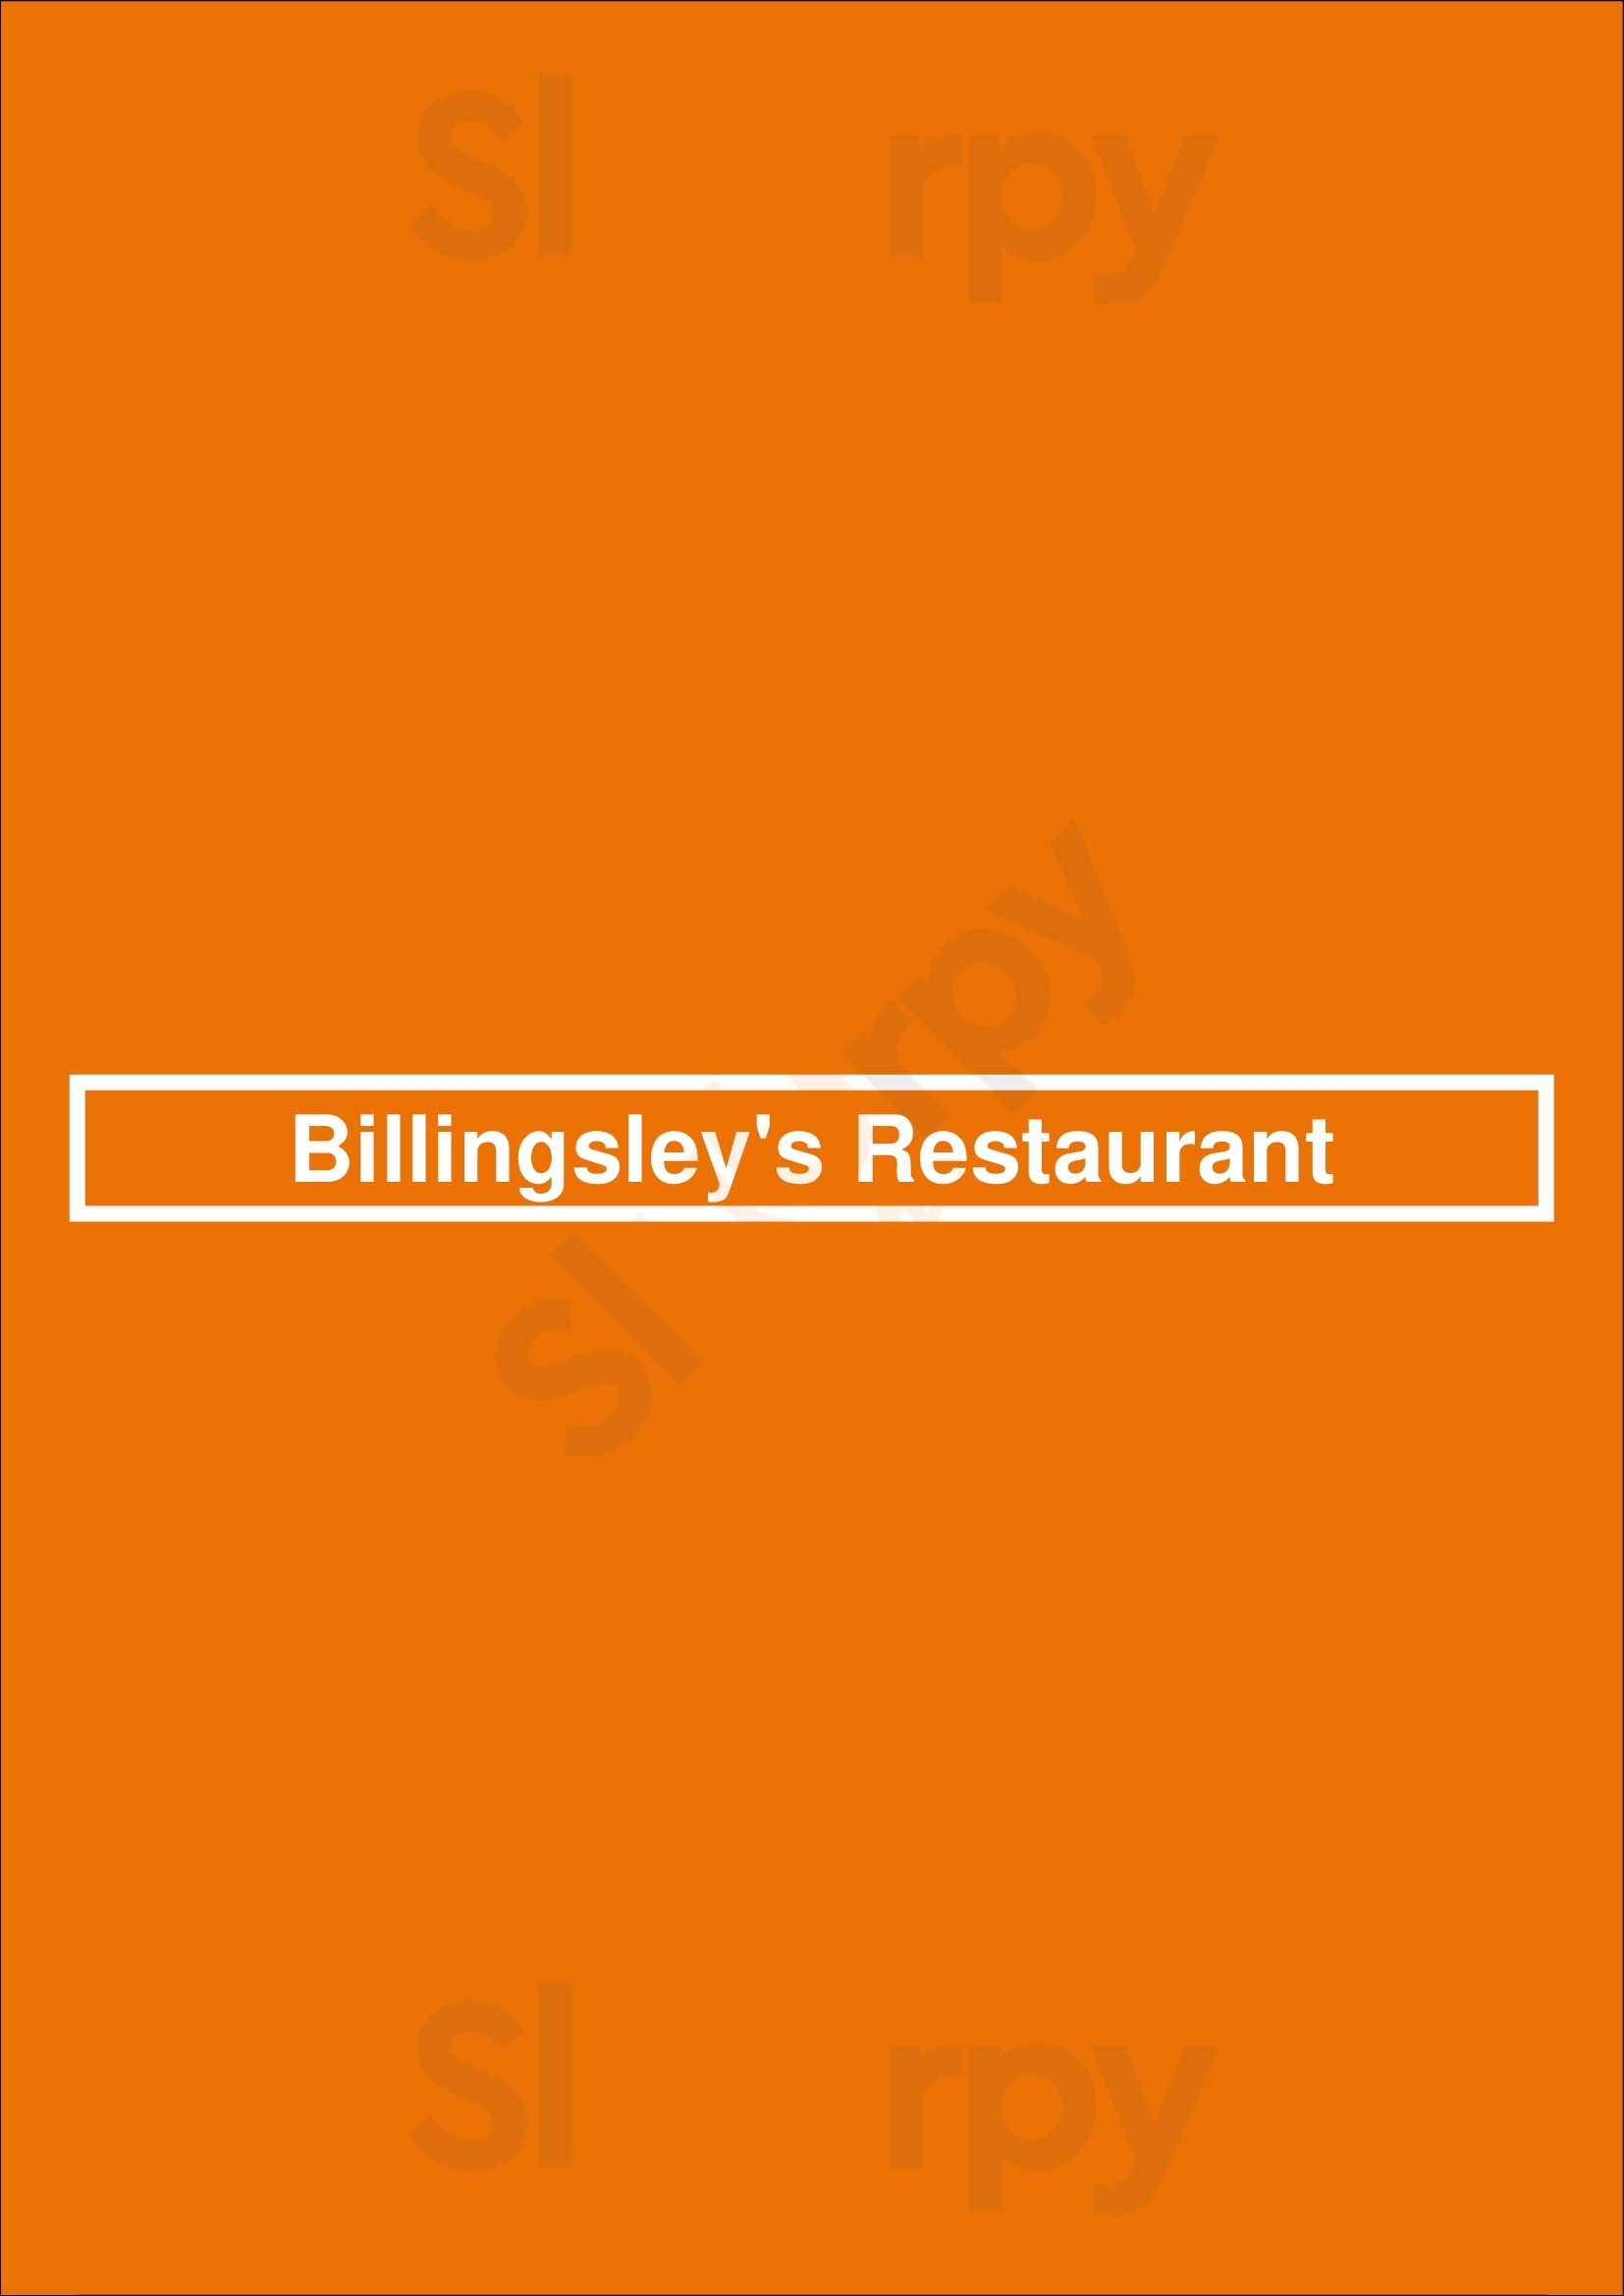 Billingsley's Restaurant Los Angeles Menu - 1